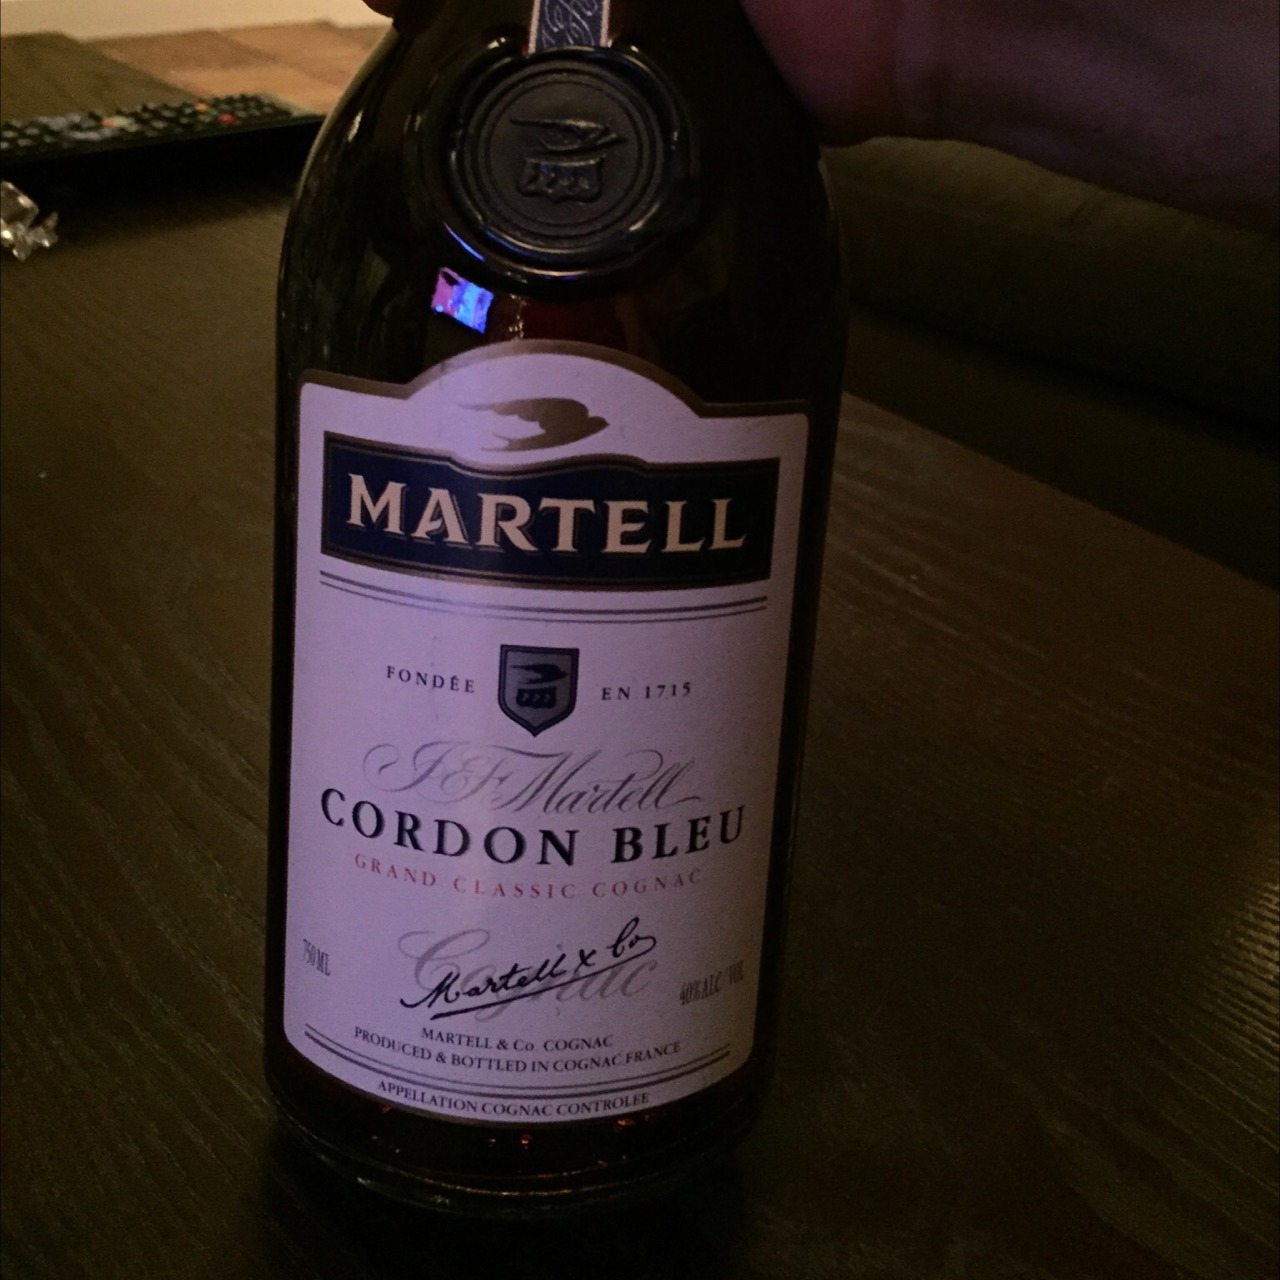 Martell Cordon Bleu Grand Classic Cognac NV